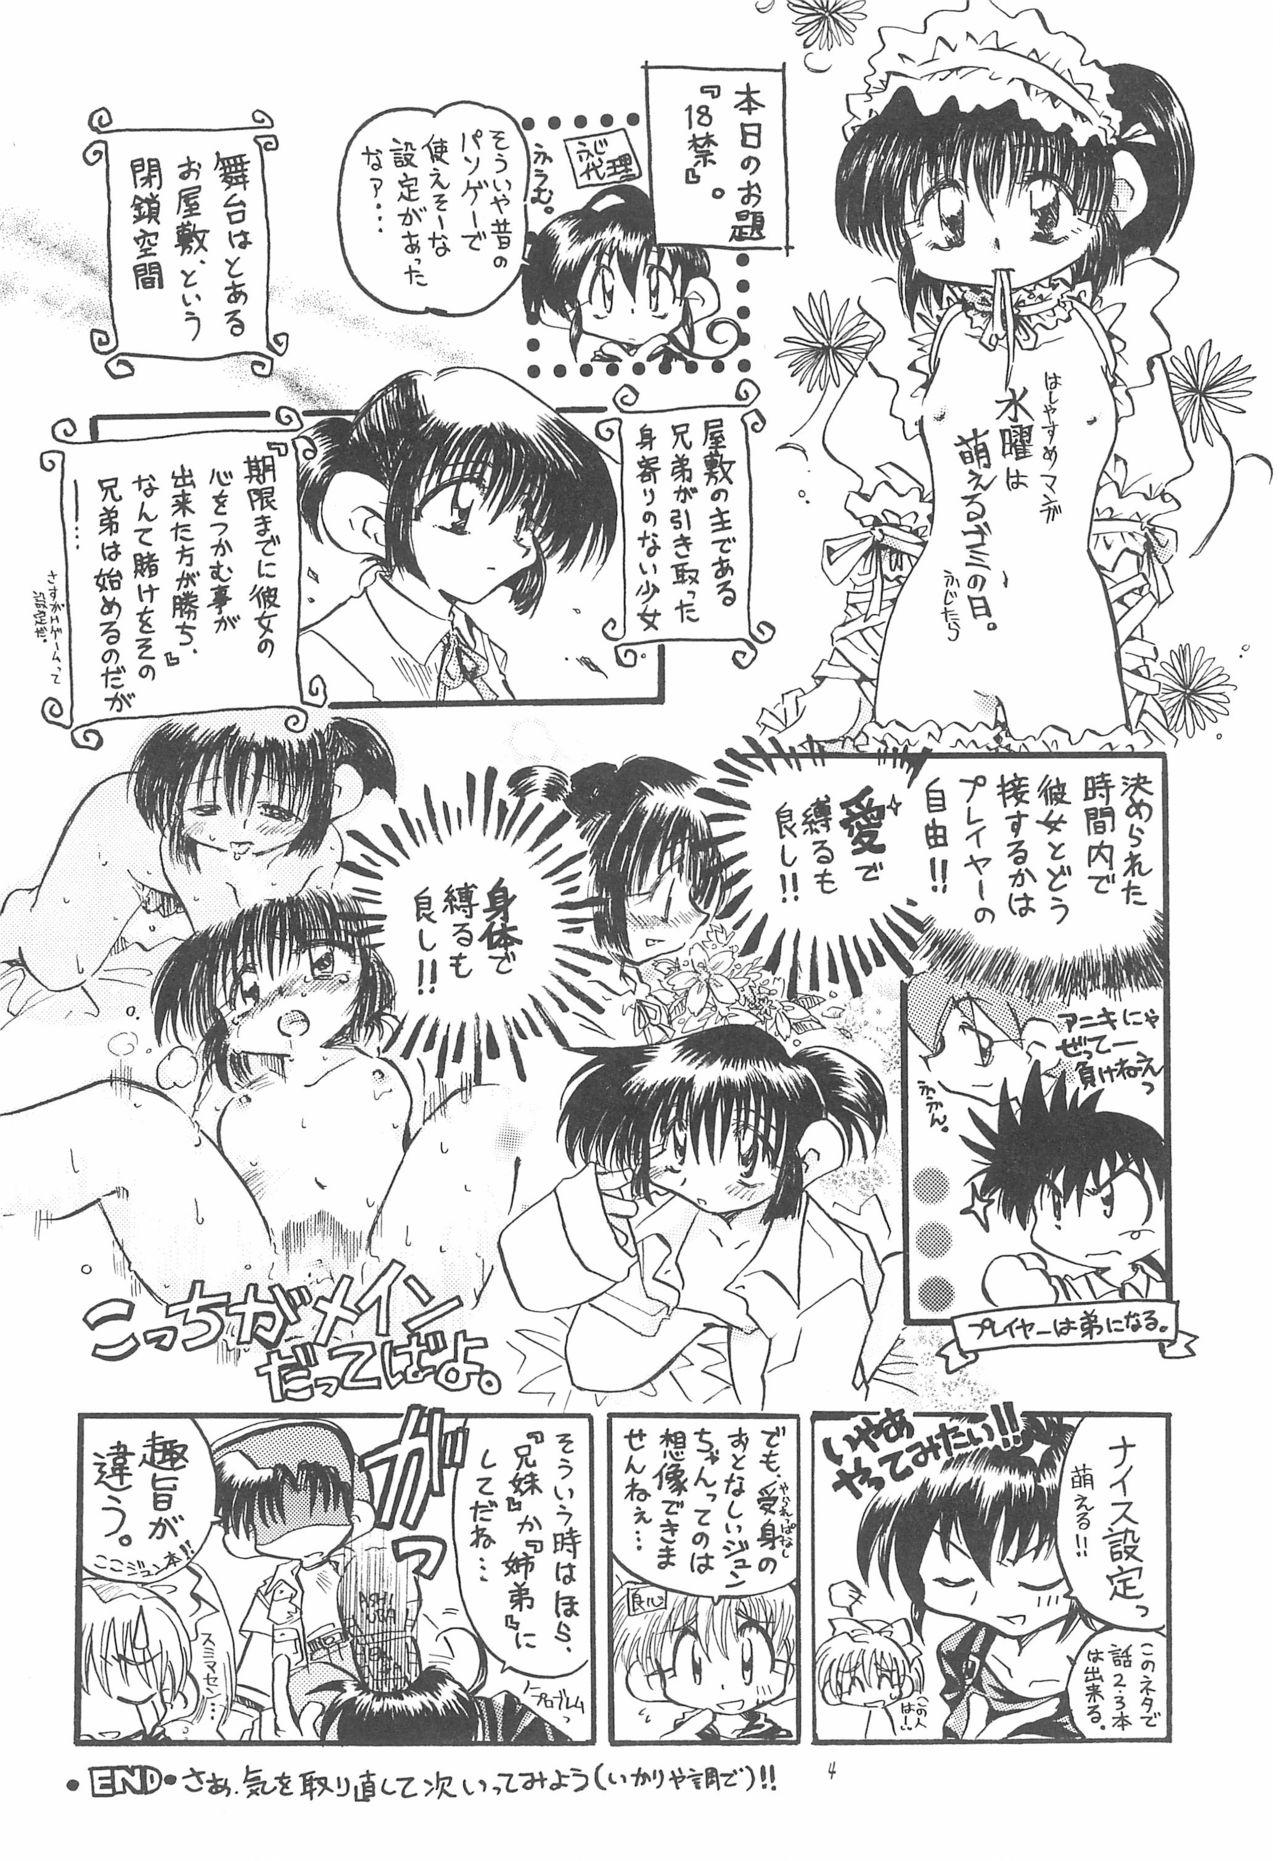 Urine Kodomo no Rakuen - Bakusou kyoudai lets and go Freaky - Page 4